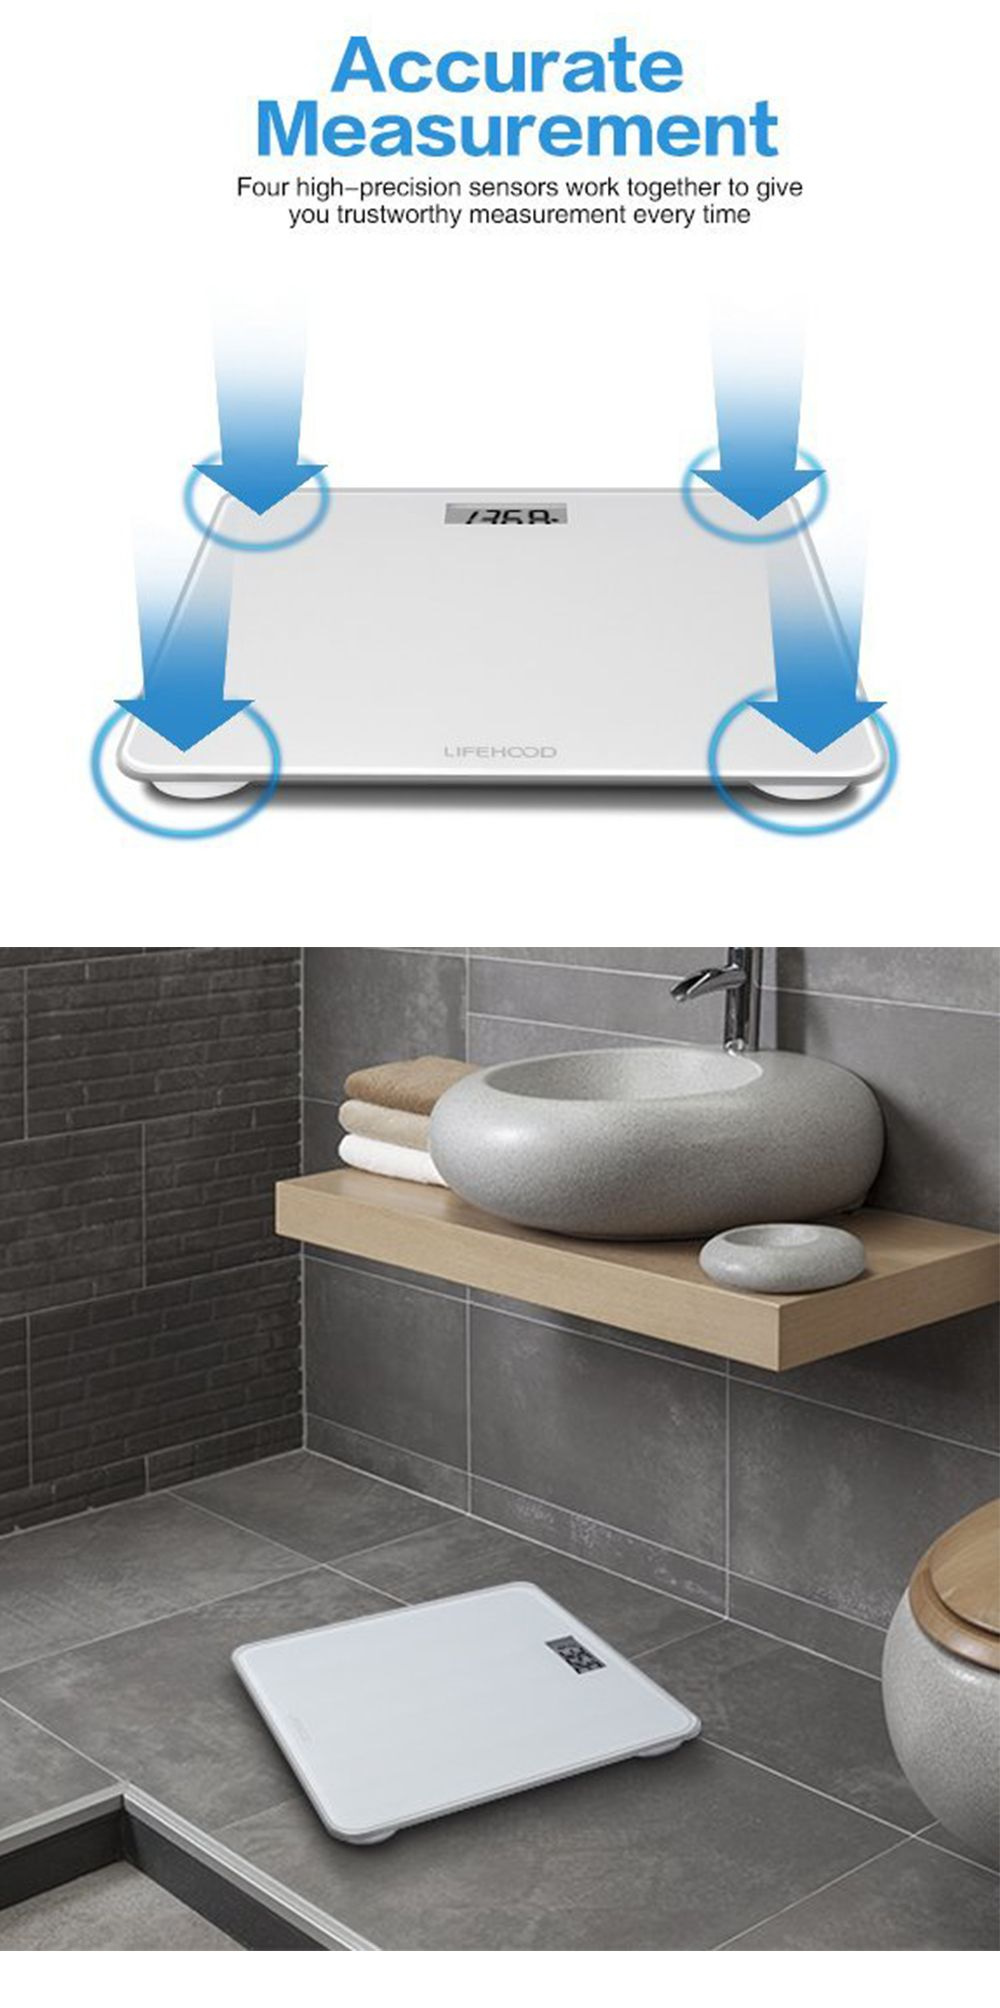 Accu-Measure Digital Scale - Accurate and Precise - Bathroom and